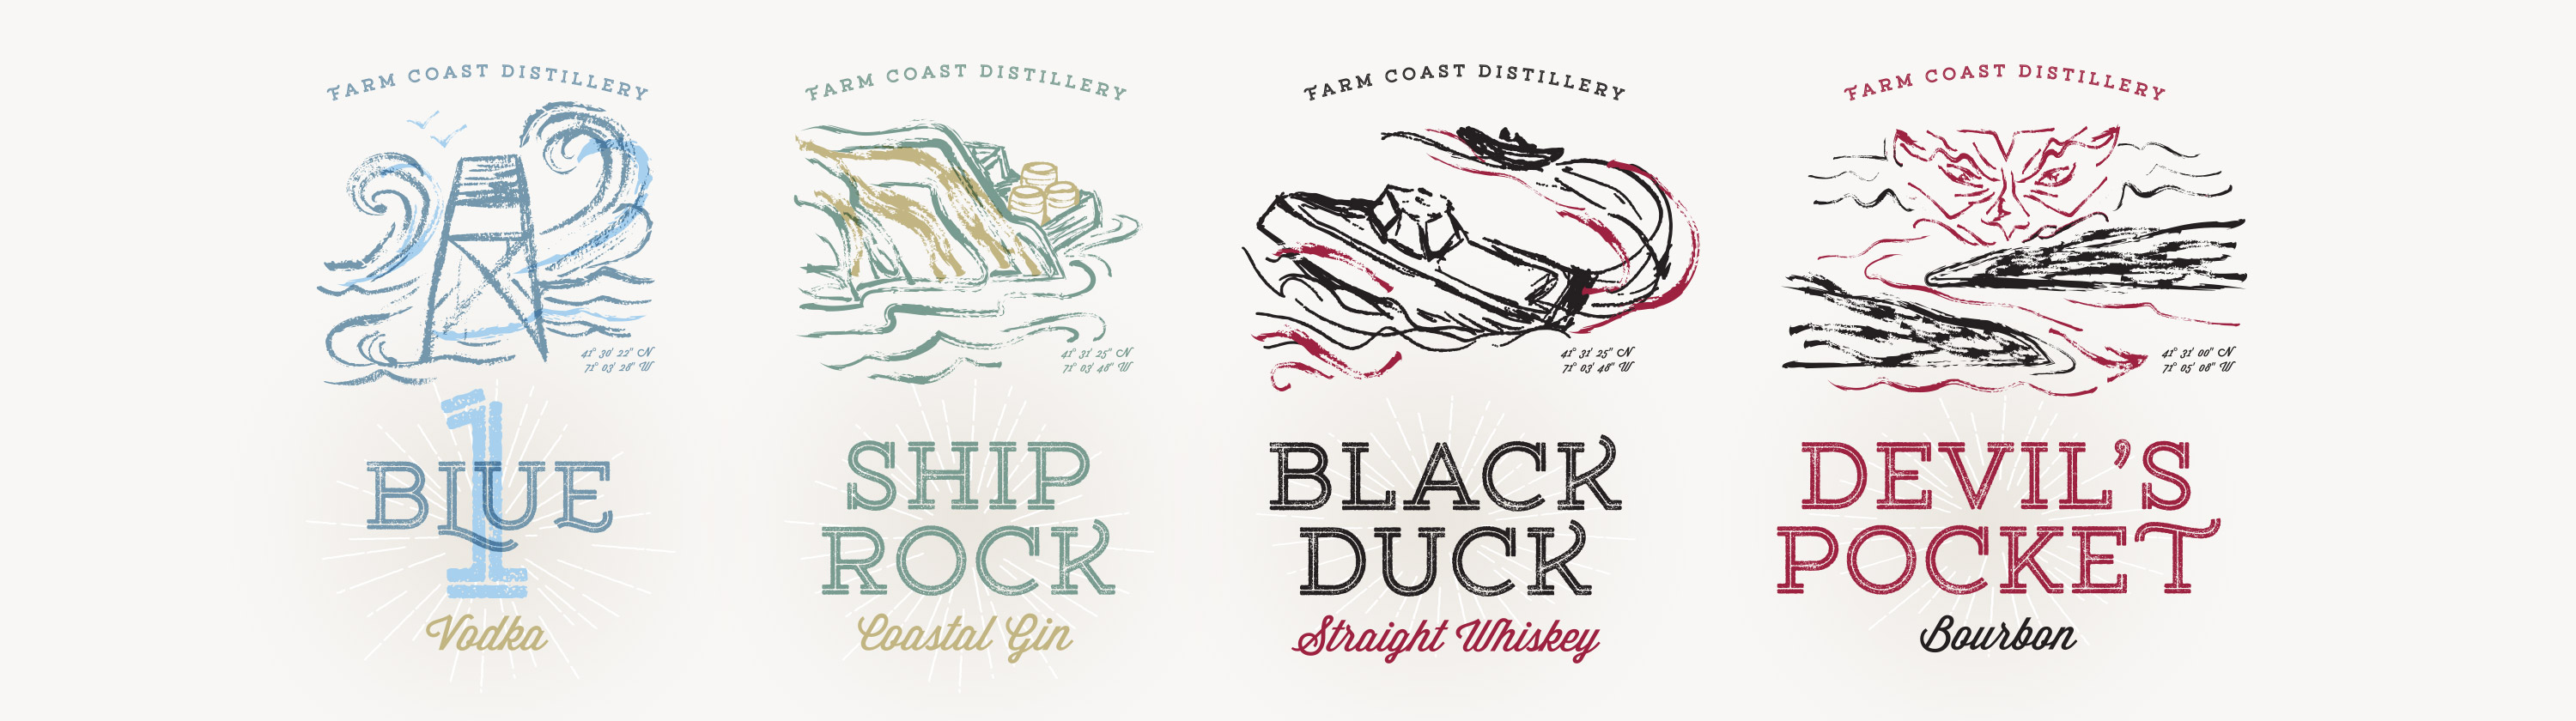 Farm Coast Distillery branding for vodka, gin, whiskey, and bourbon